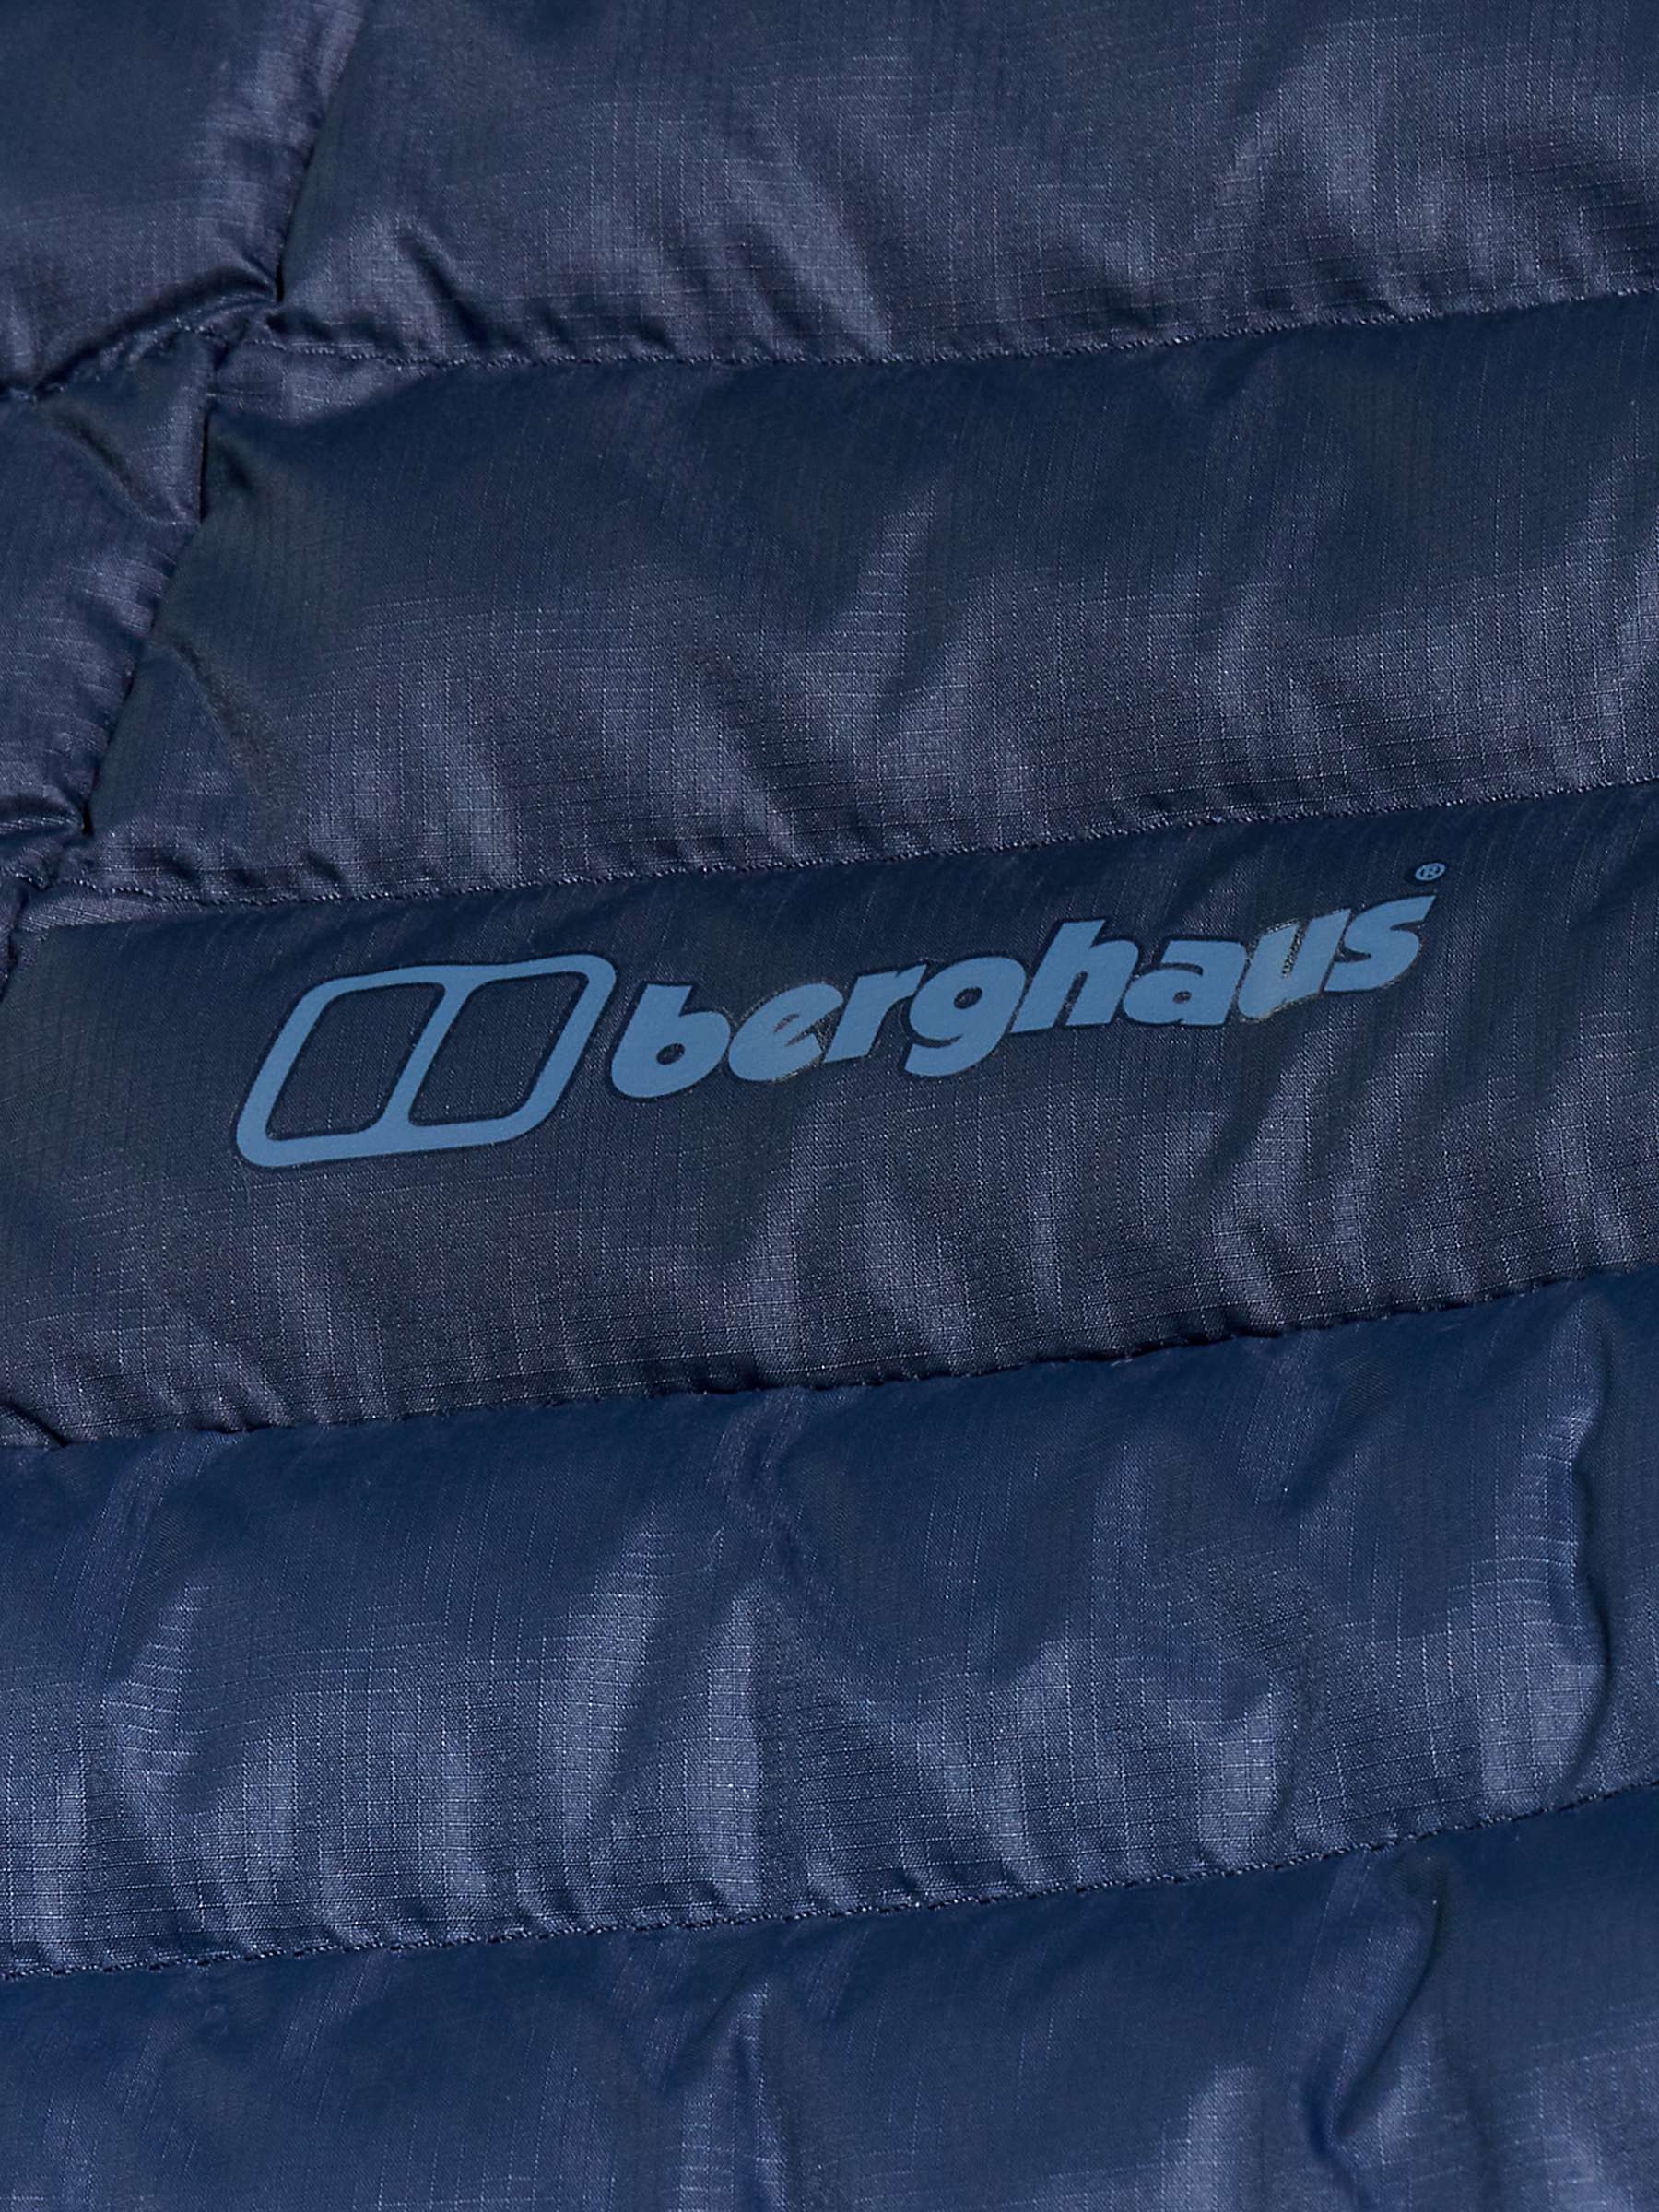 Berghaus Vaskye Men's Insulated Jacket at John Lewis & Partners